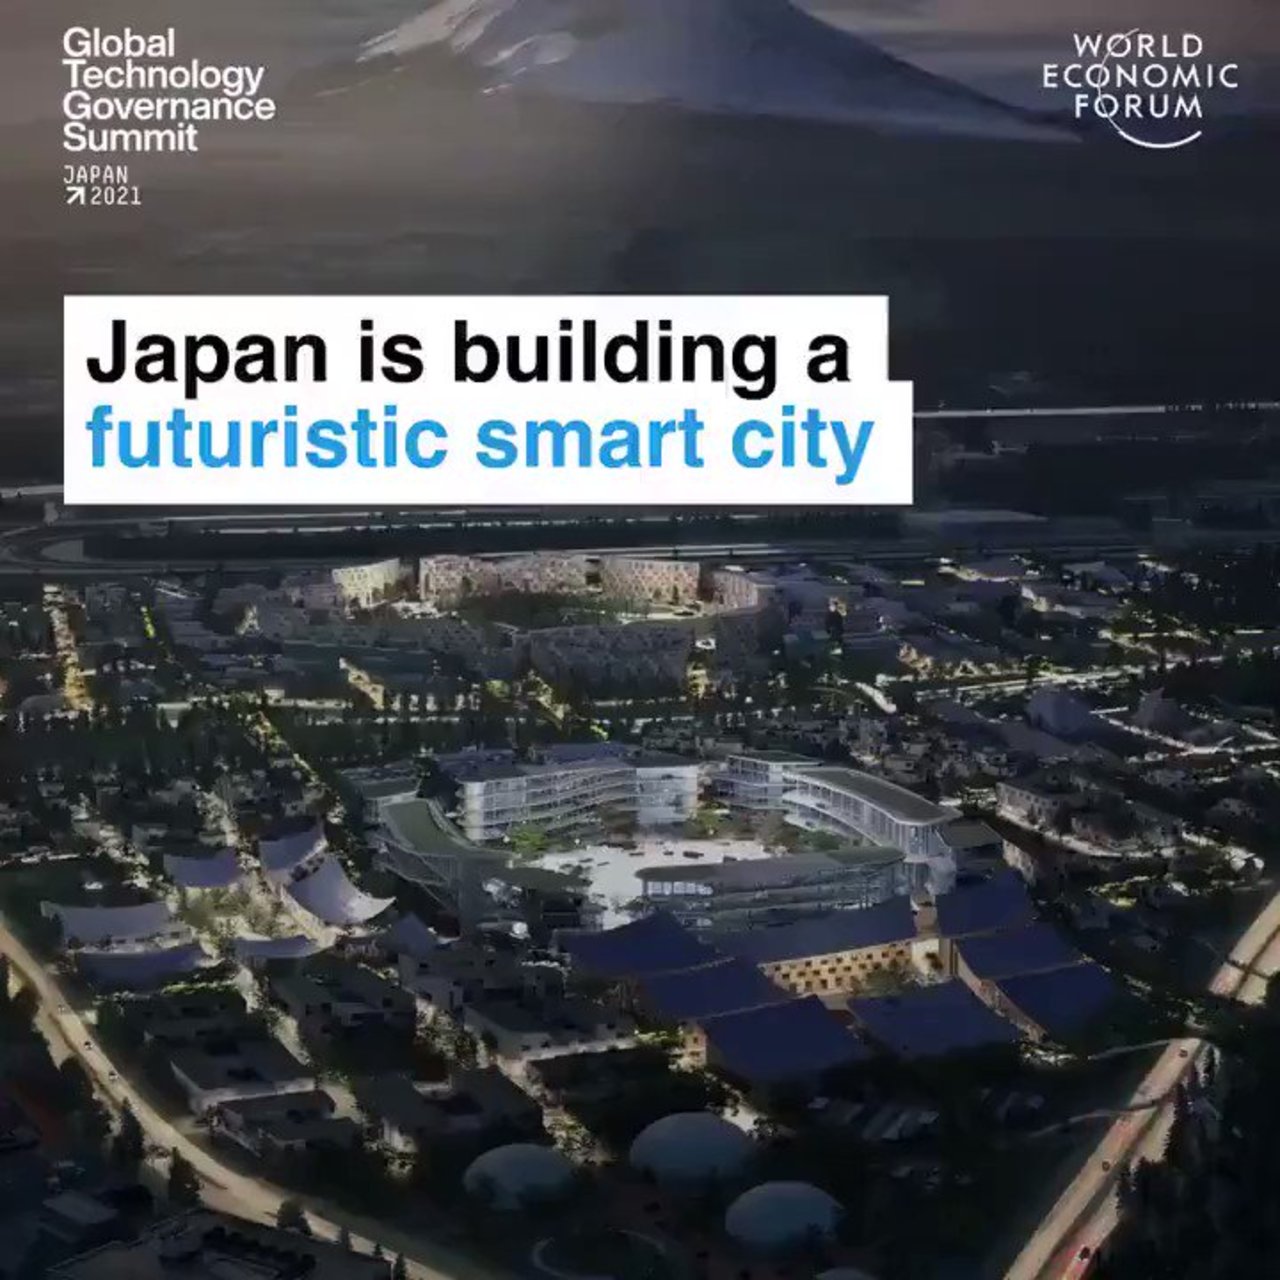 Japan is building a futuristic #Smartcity by @wef #AI #IoT #Engineering #Digital #DigitalTransformation #Technology #Innovation #SelfDrivingCars #CleanEnergy cc: @maxjcm @ronald_vanloon @pascal_bornet @marcusborba https://t.co/ovz9nzmlYG